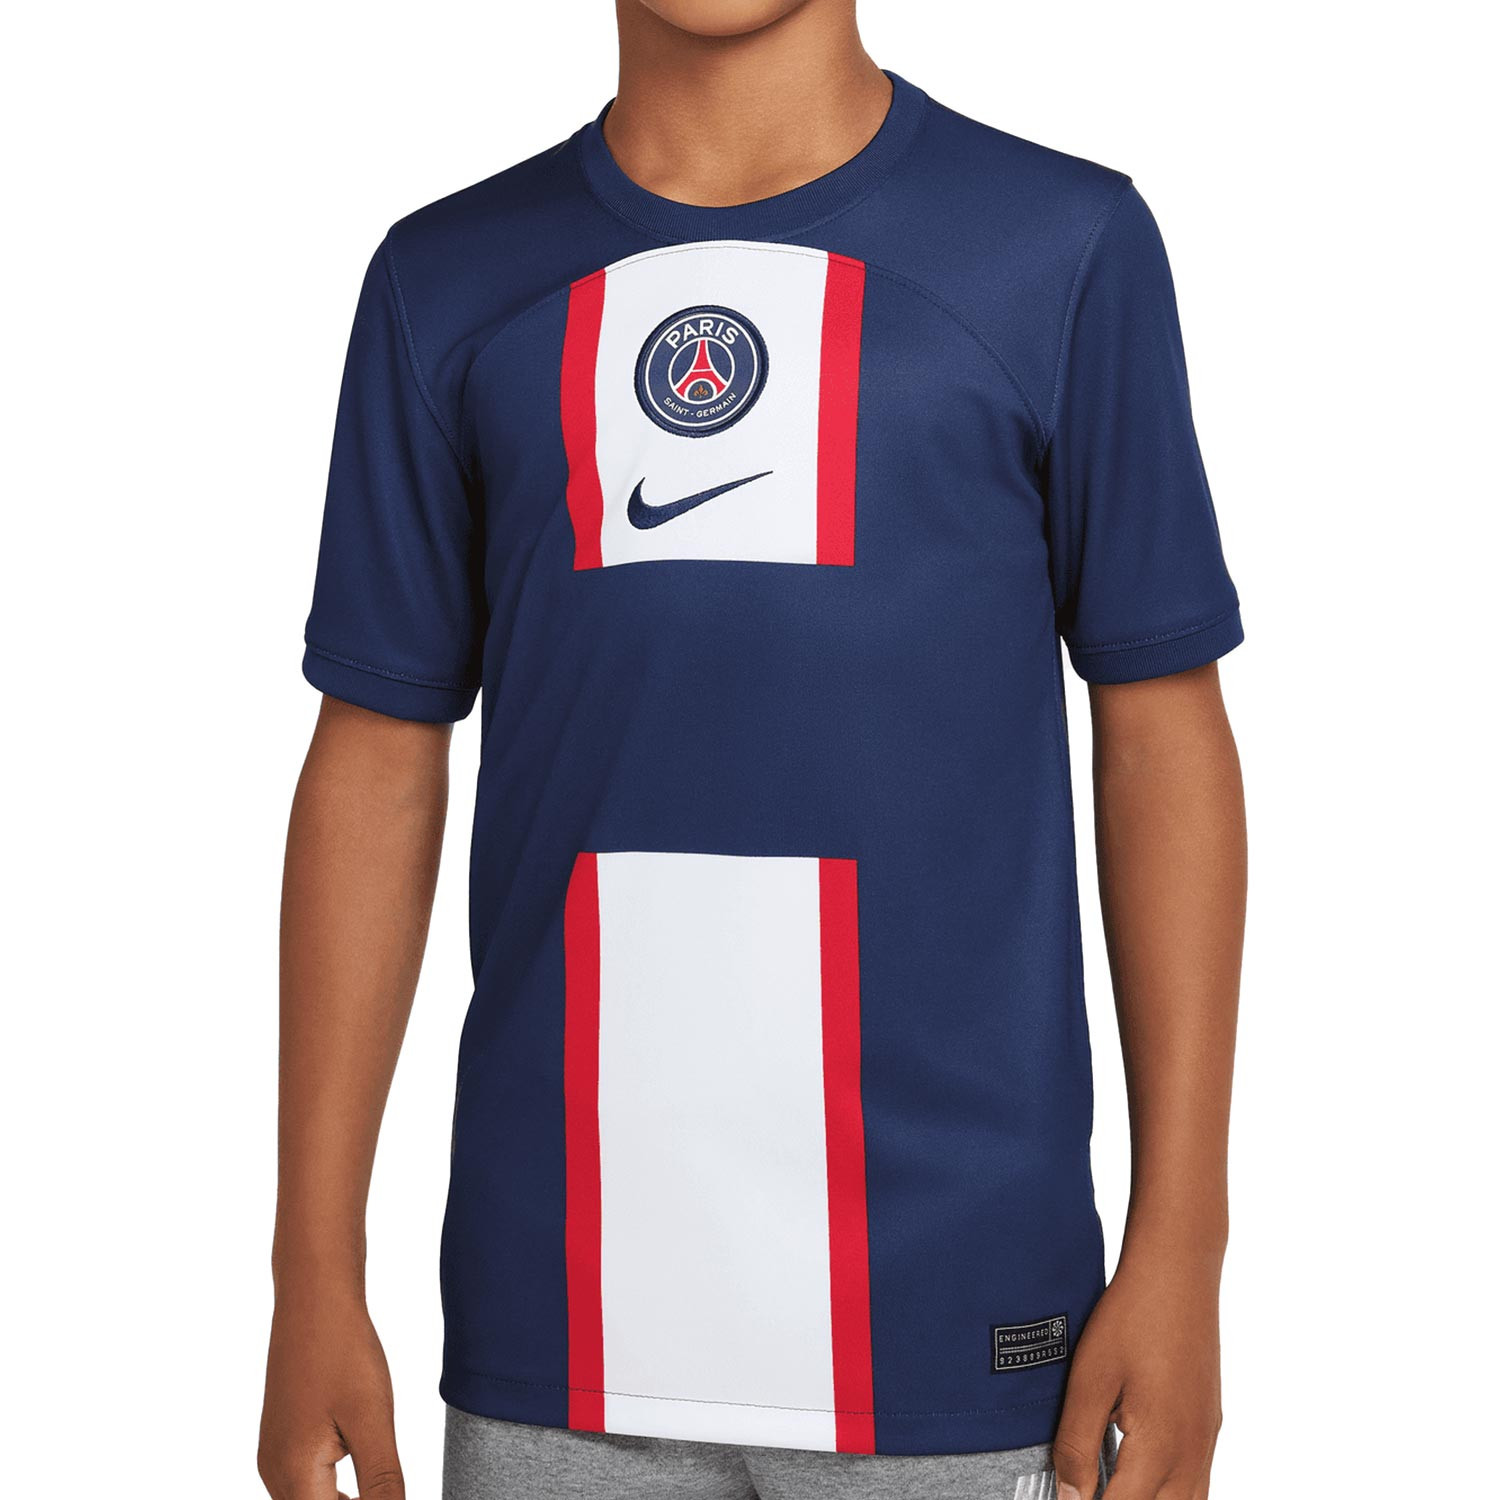 Camiseta Nike niño 2022 2023 Stadium publi | futbolmaniaKids